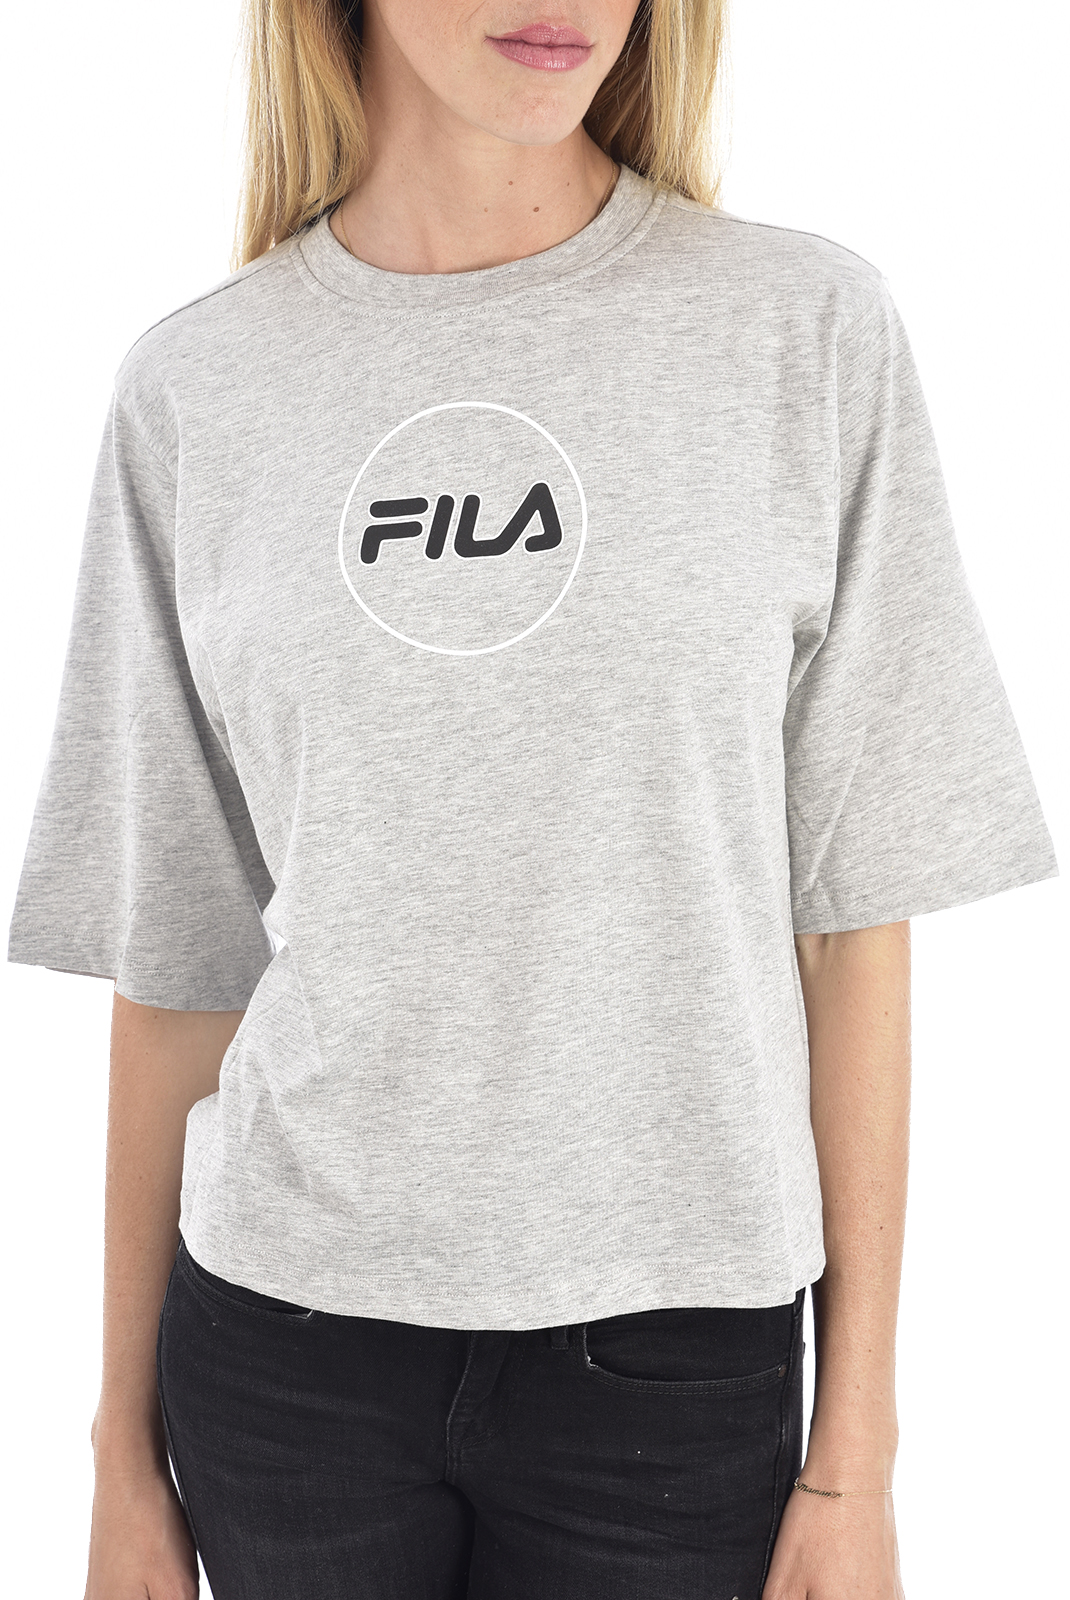 Tee-shirt gris col rond pour femme Fila - 682310